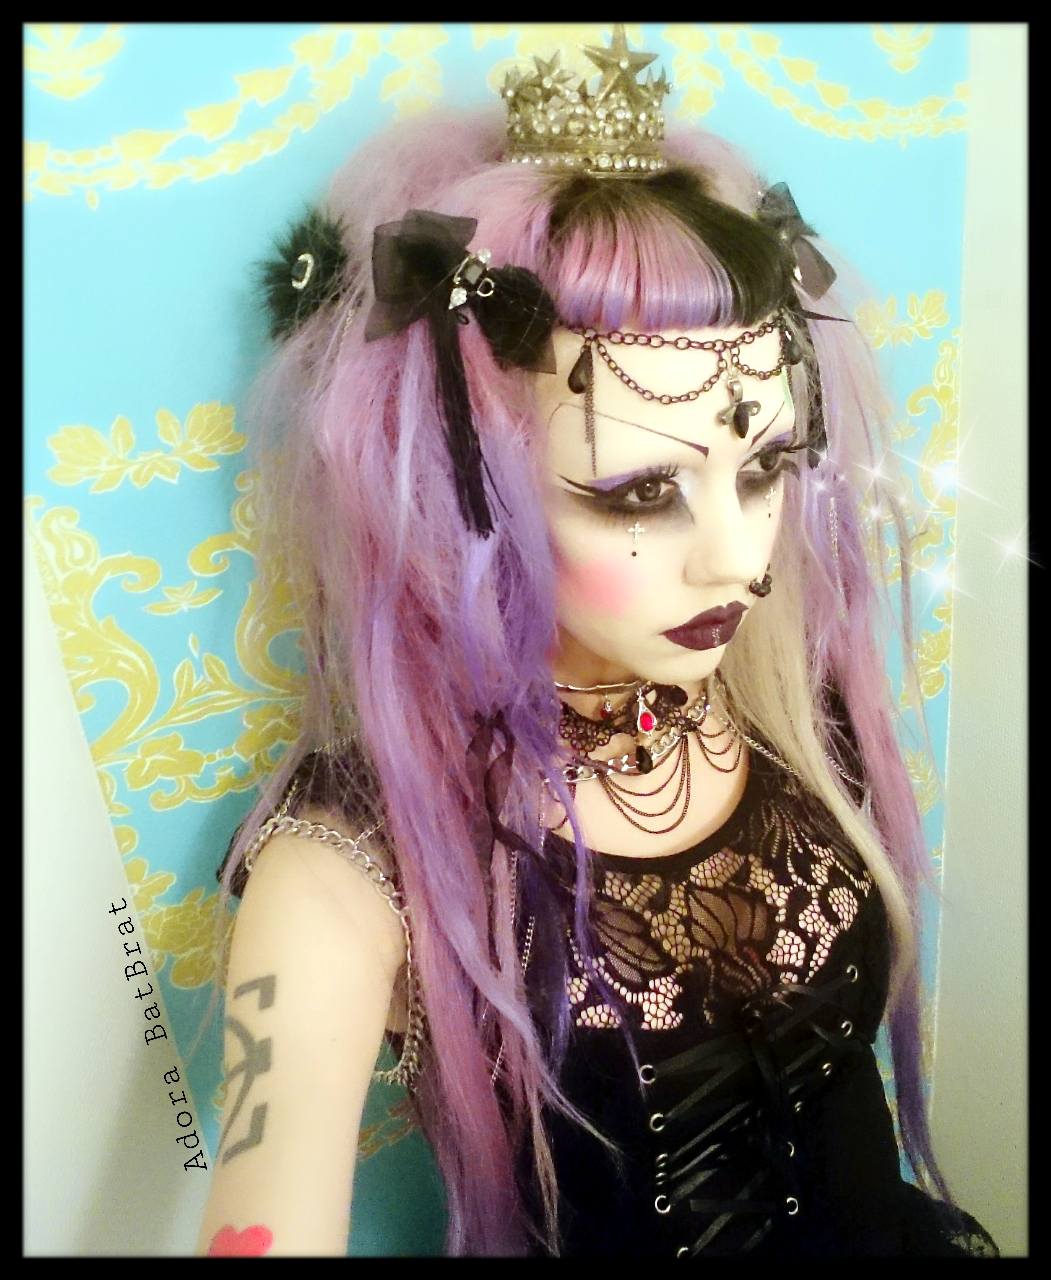 Adora BatBrat: Today's Goth look - Purple Princess II